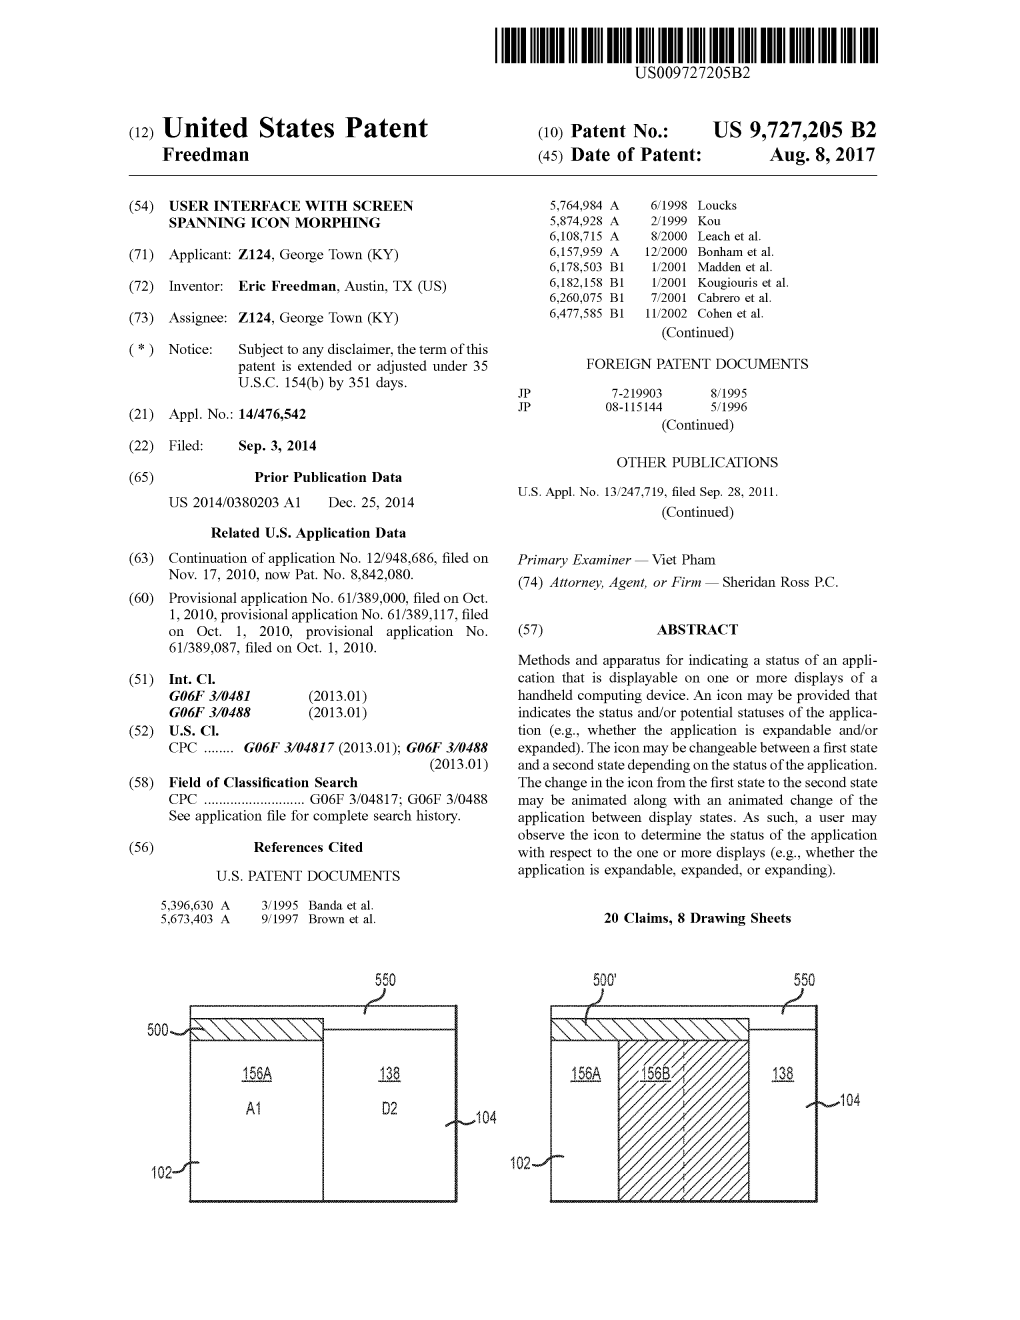 United States Patent (10) Patent No.: US 9,727,205 B2 Freedman (45) Date of Patent: Aug